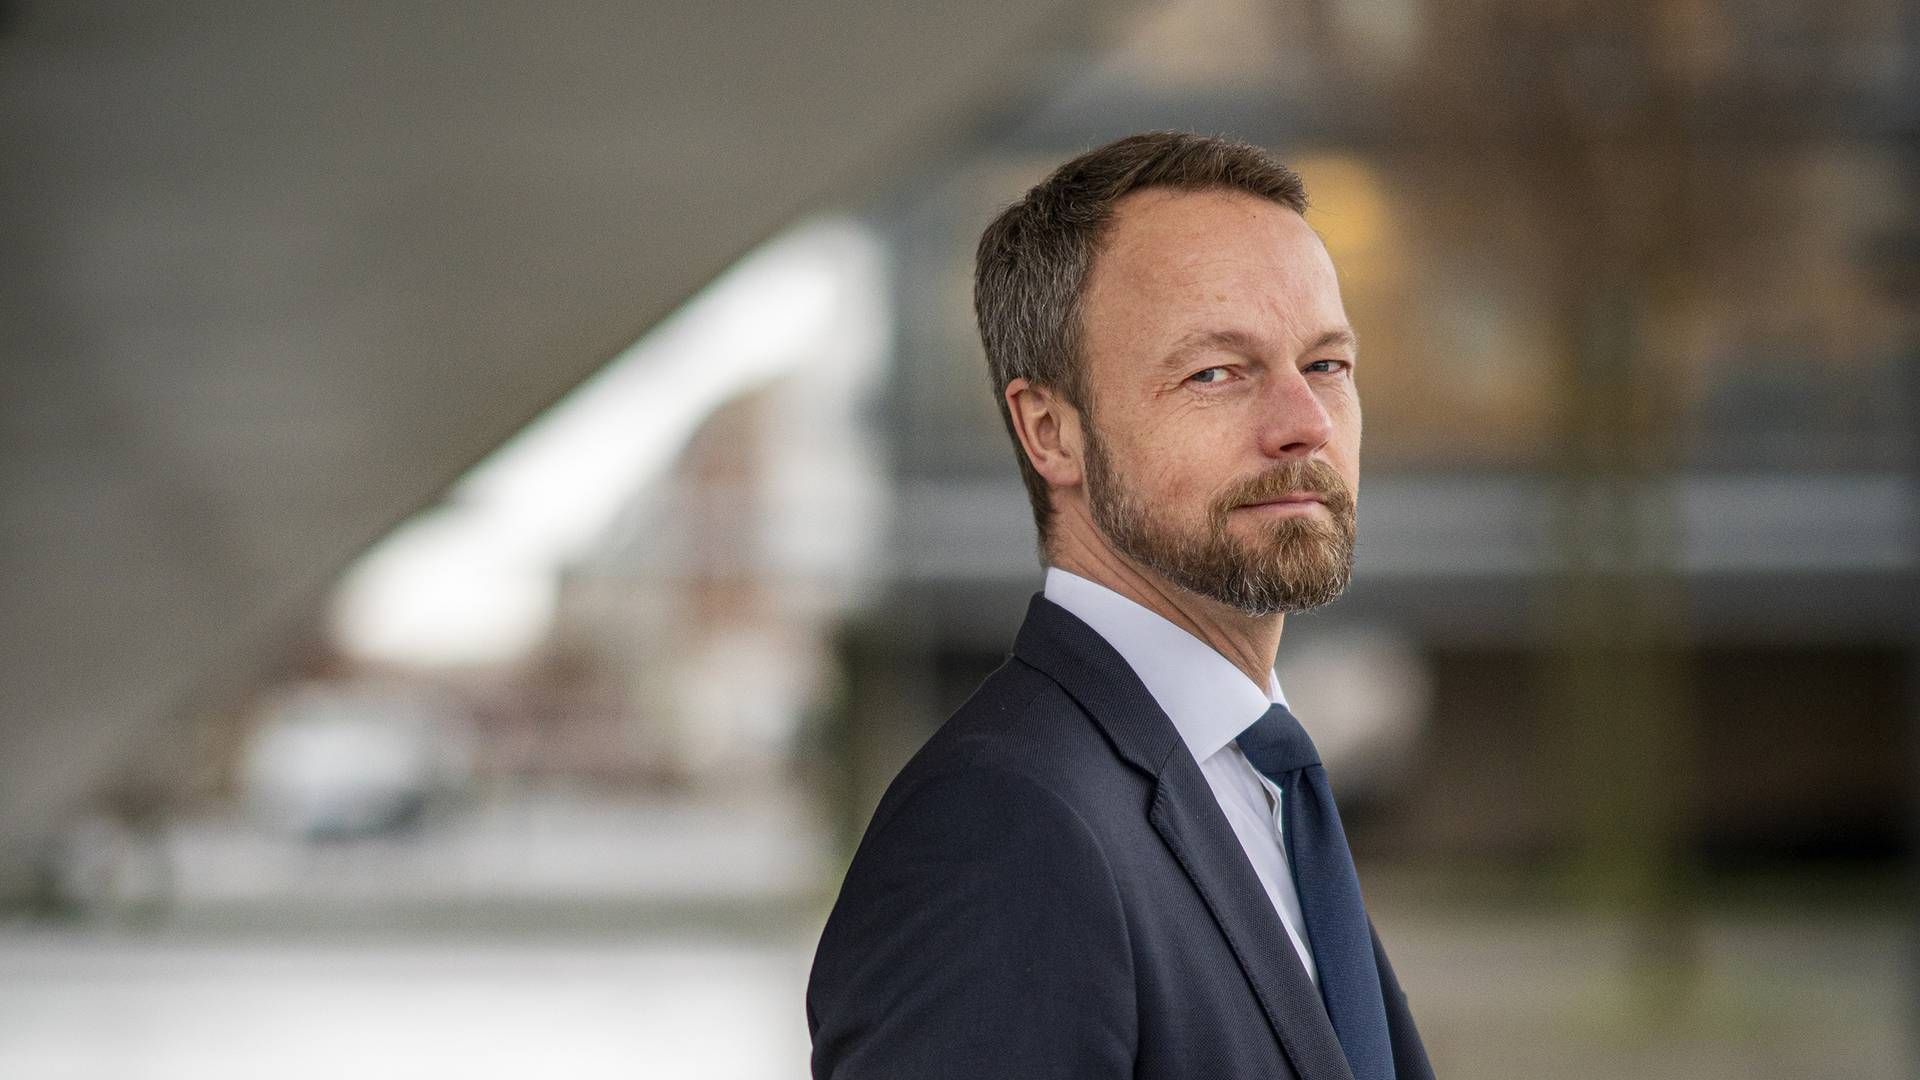 Peter Kjærgaard, head of Nykredit Wealth Management. | Photo: Stine Bidstrup/ERH